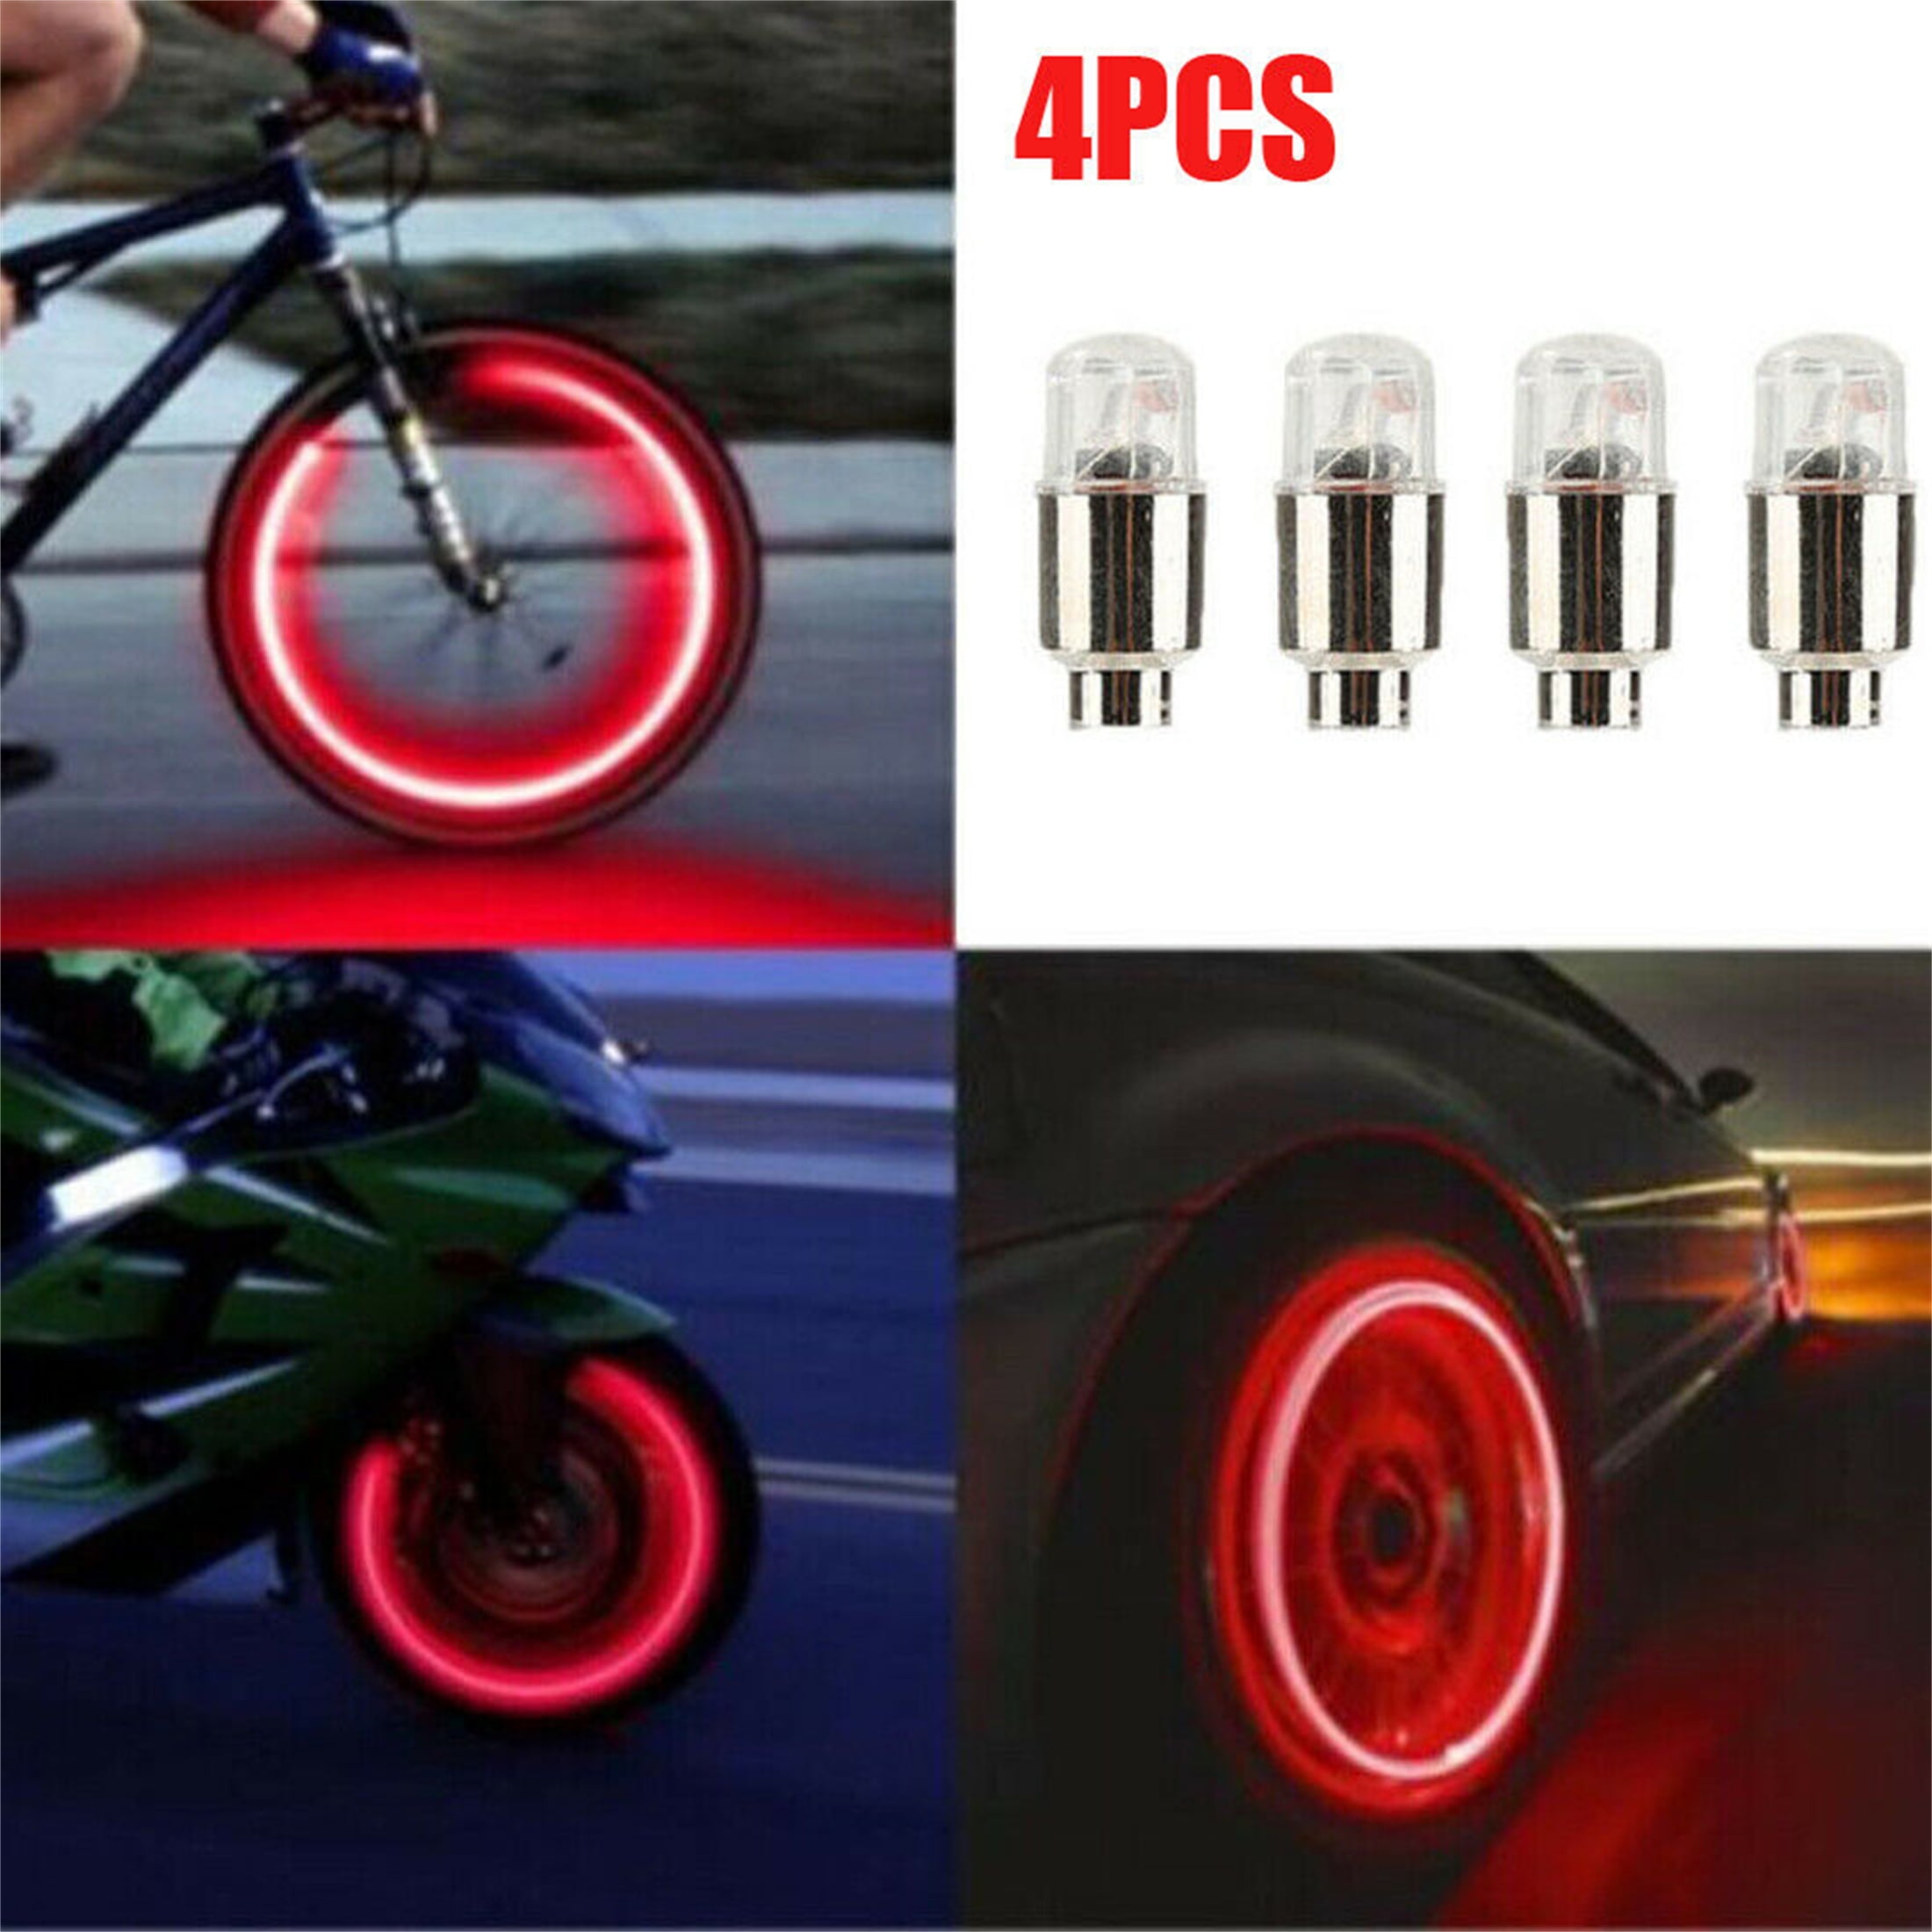 4pcs Car Bicycle Wheel Tire Tyre Air Valve Stem Screws LED Light Accessories 